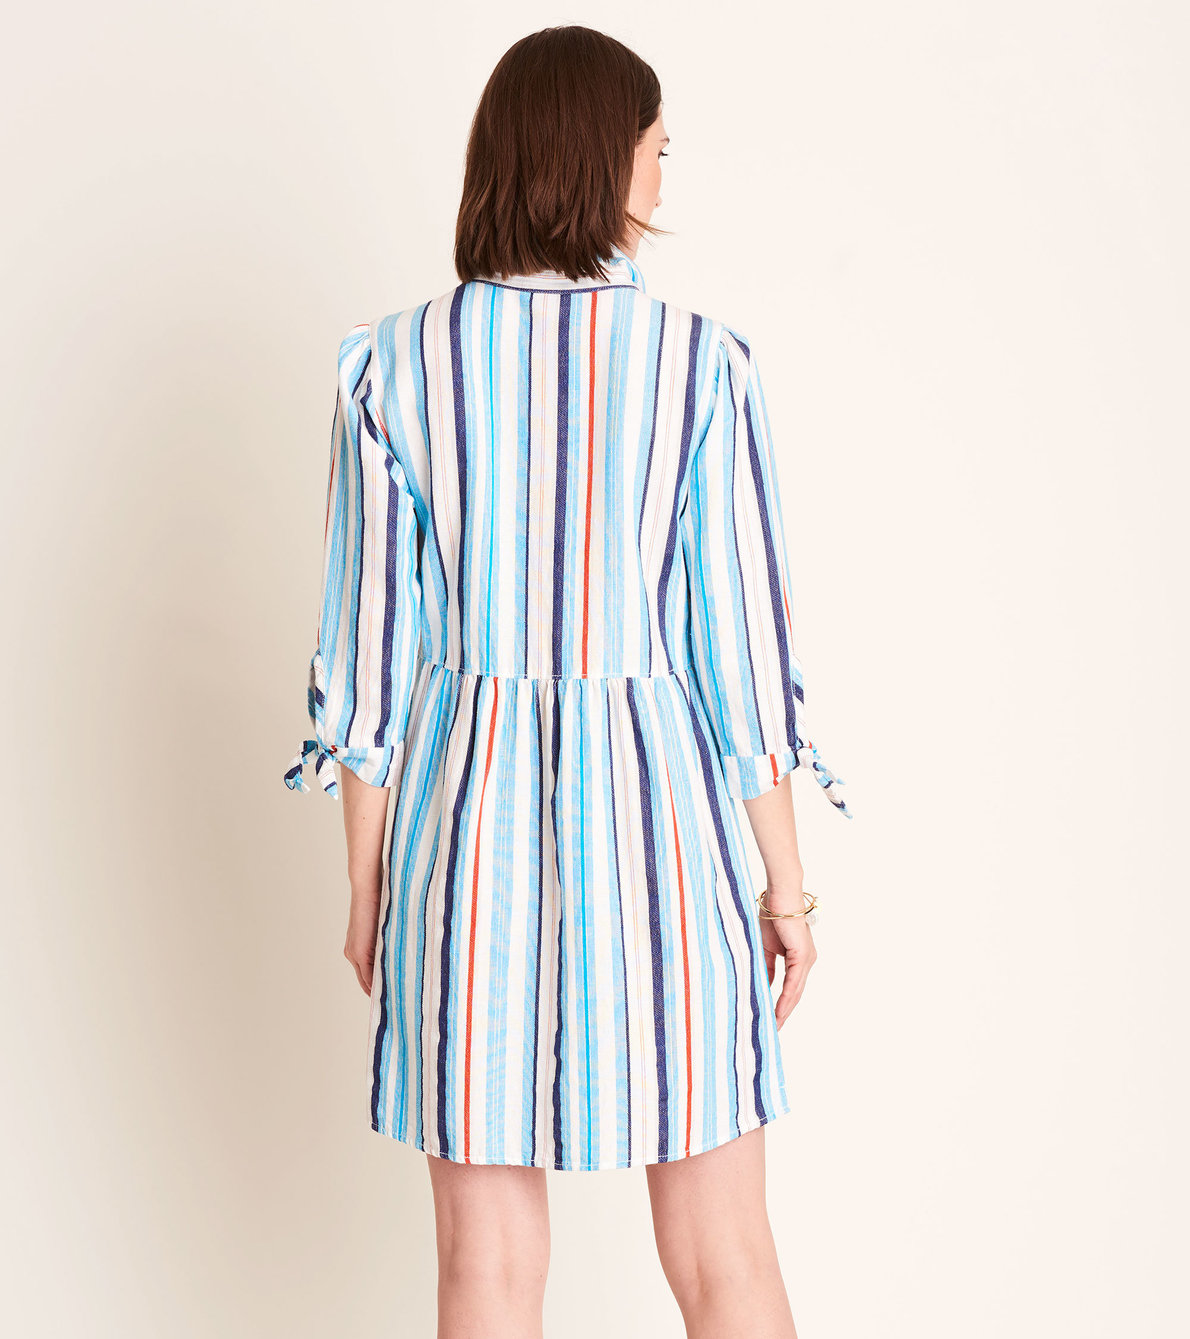 View larger image of Caroline Dress - Multi Stripes